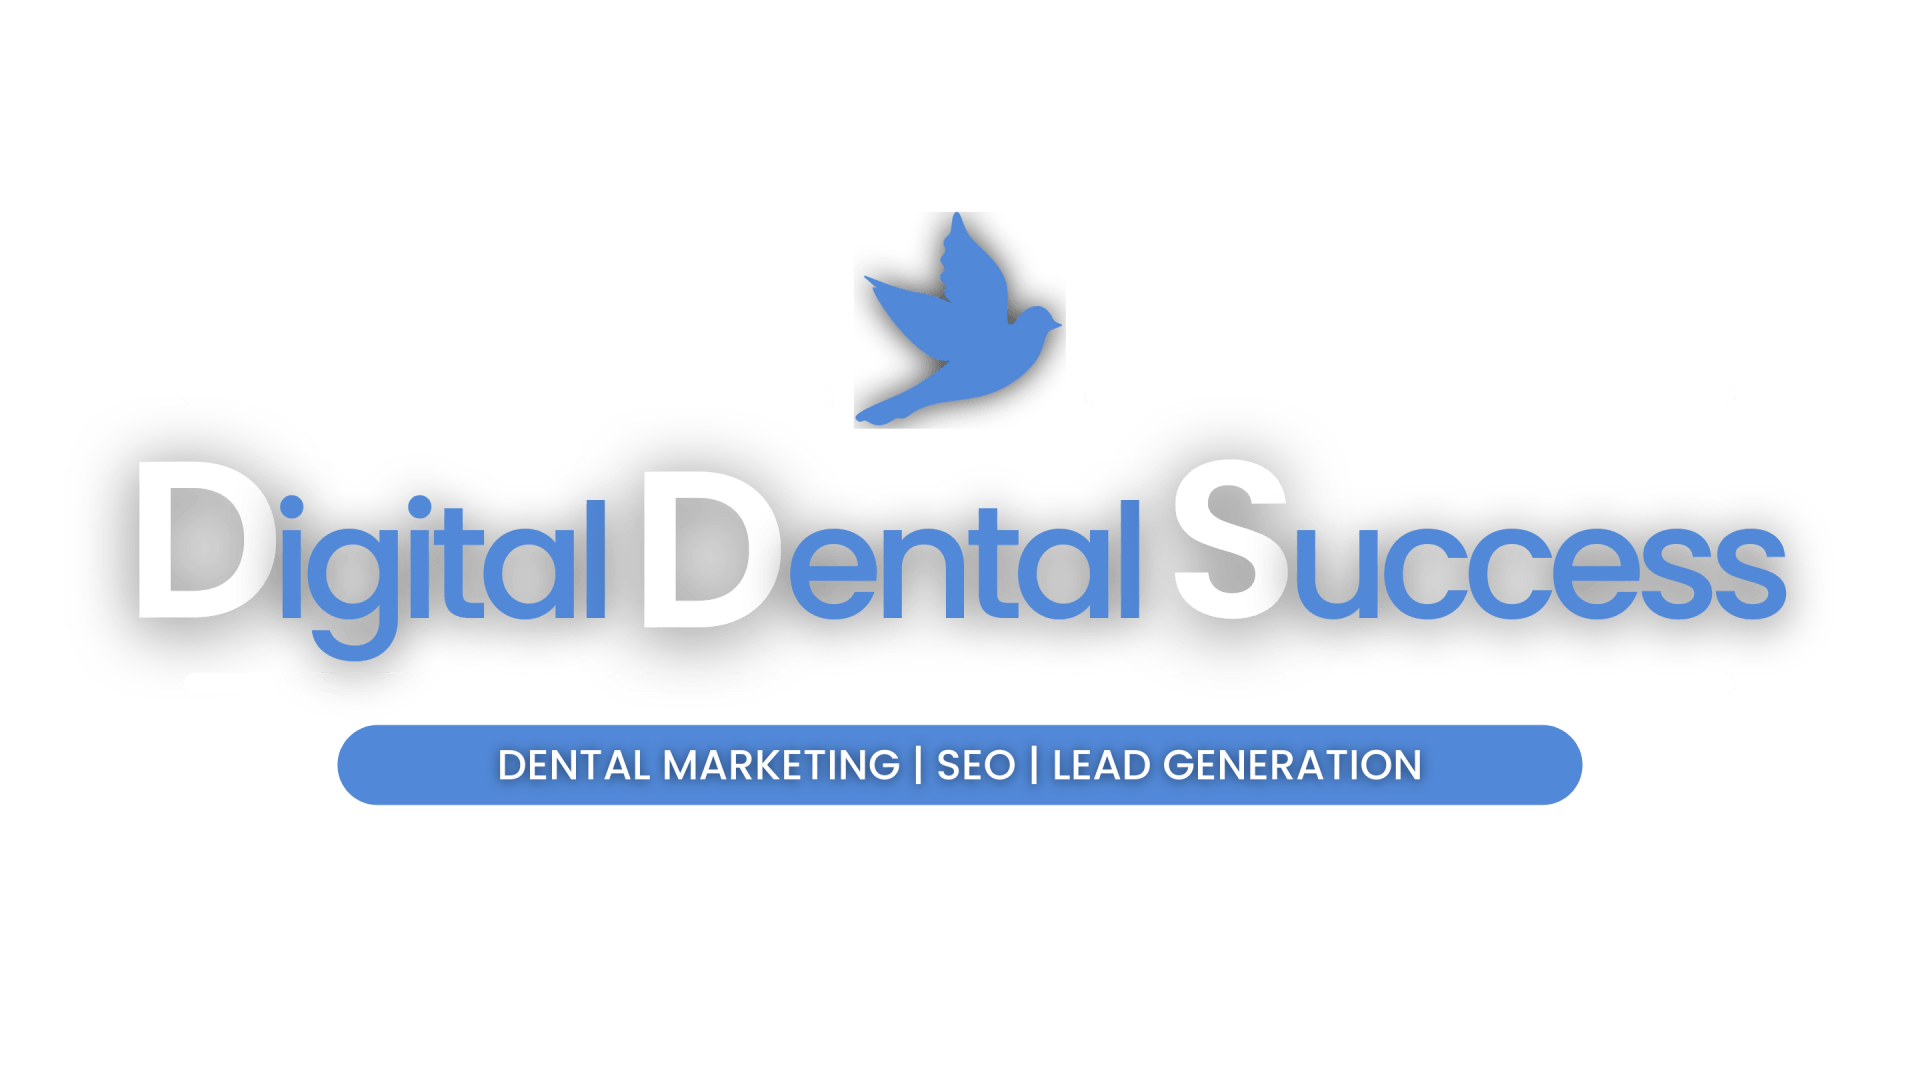 Digital Dental Success